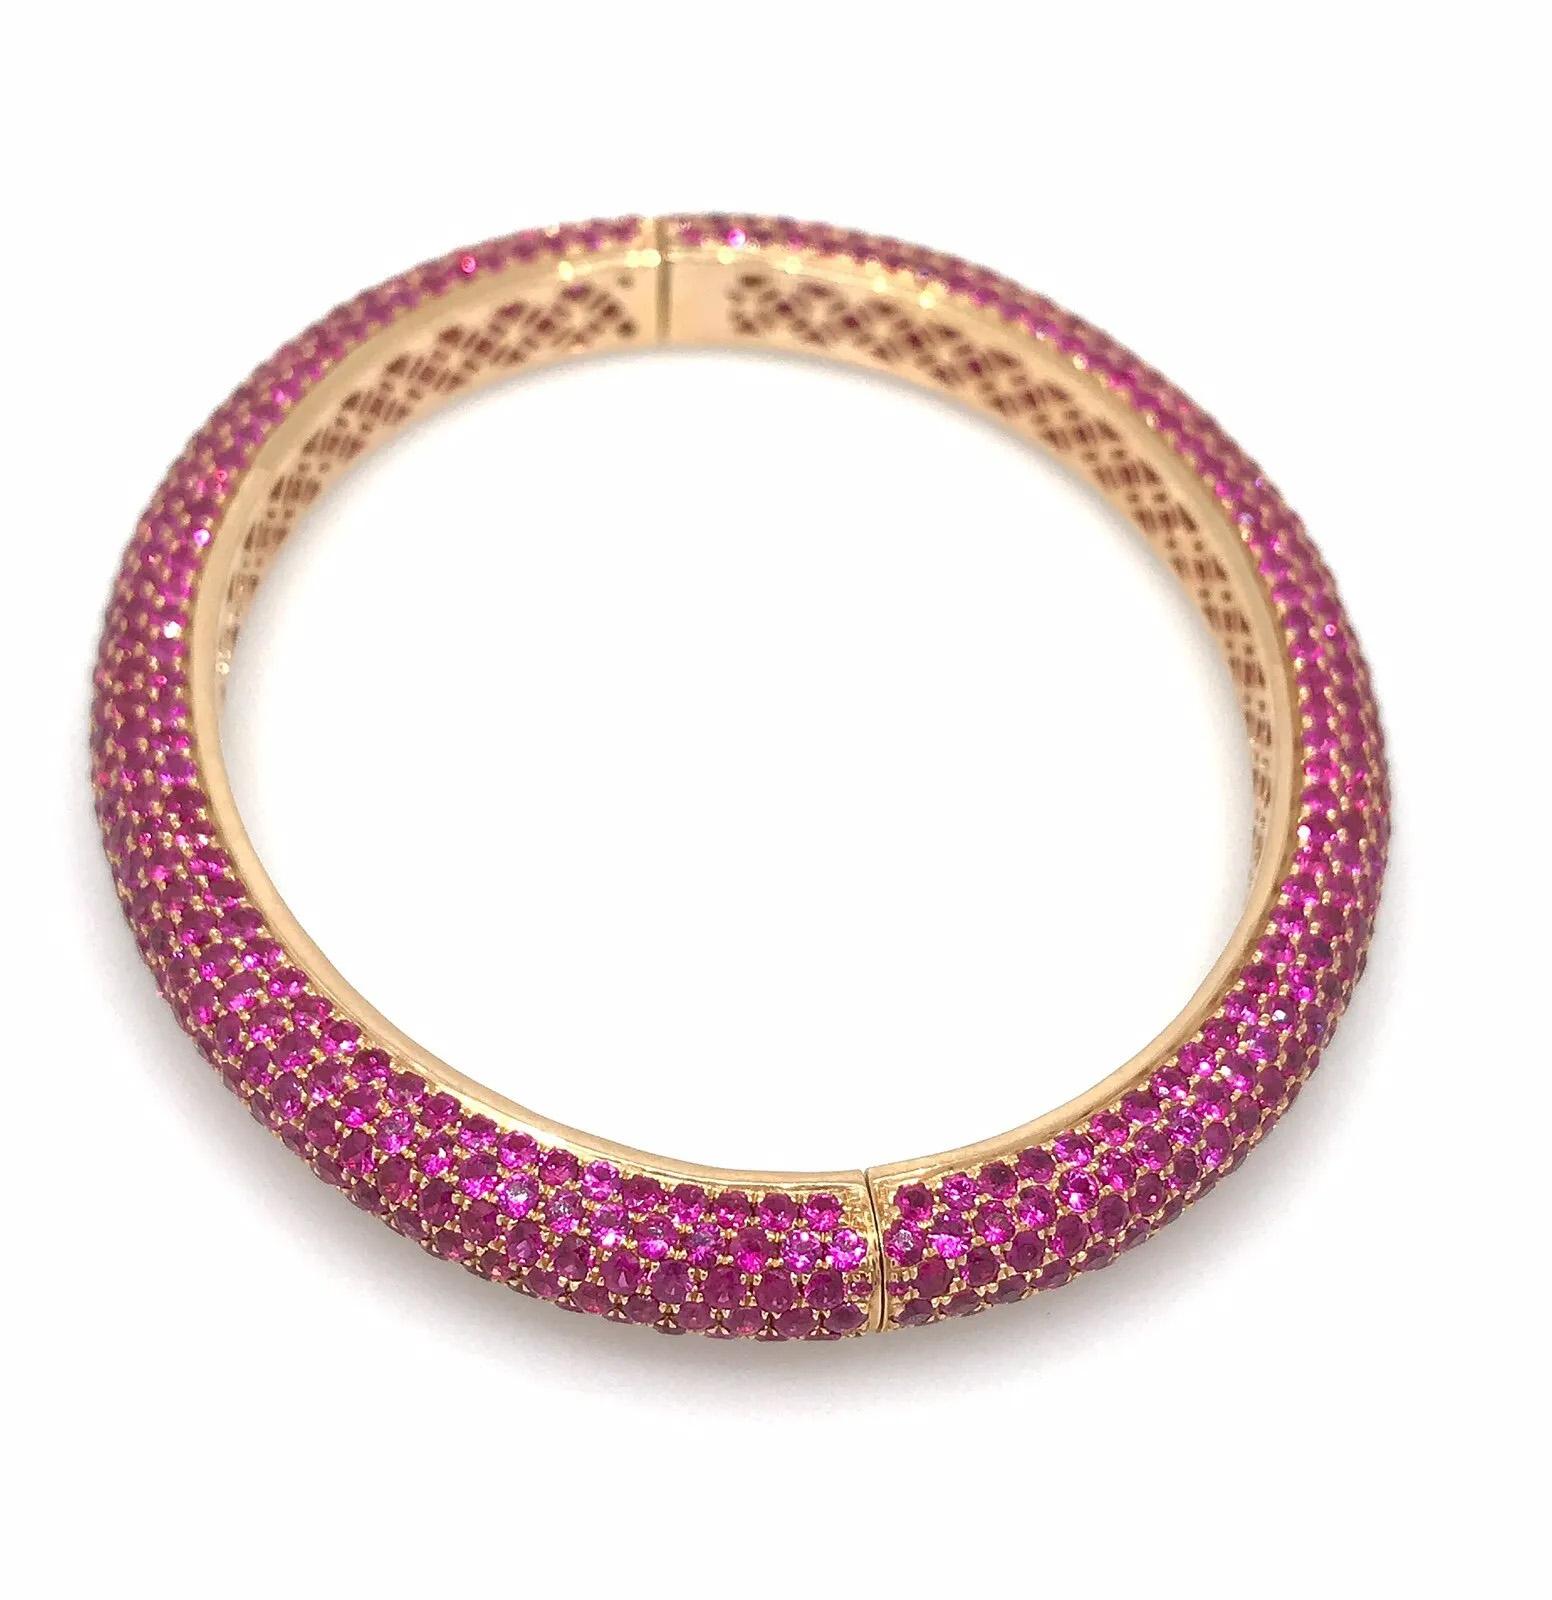 19.22 Carats Ruby Pave Bangle Bracelet in 18k Rose Gold For Sale 1